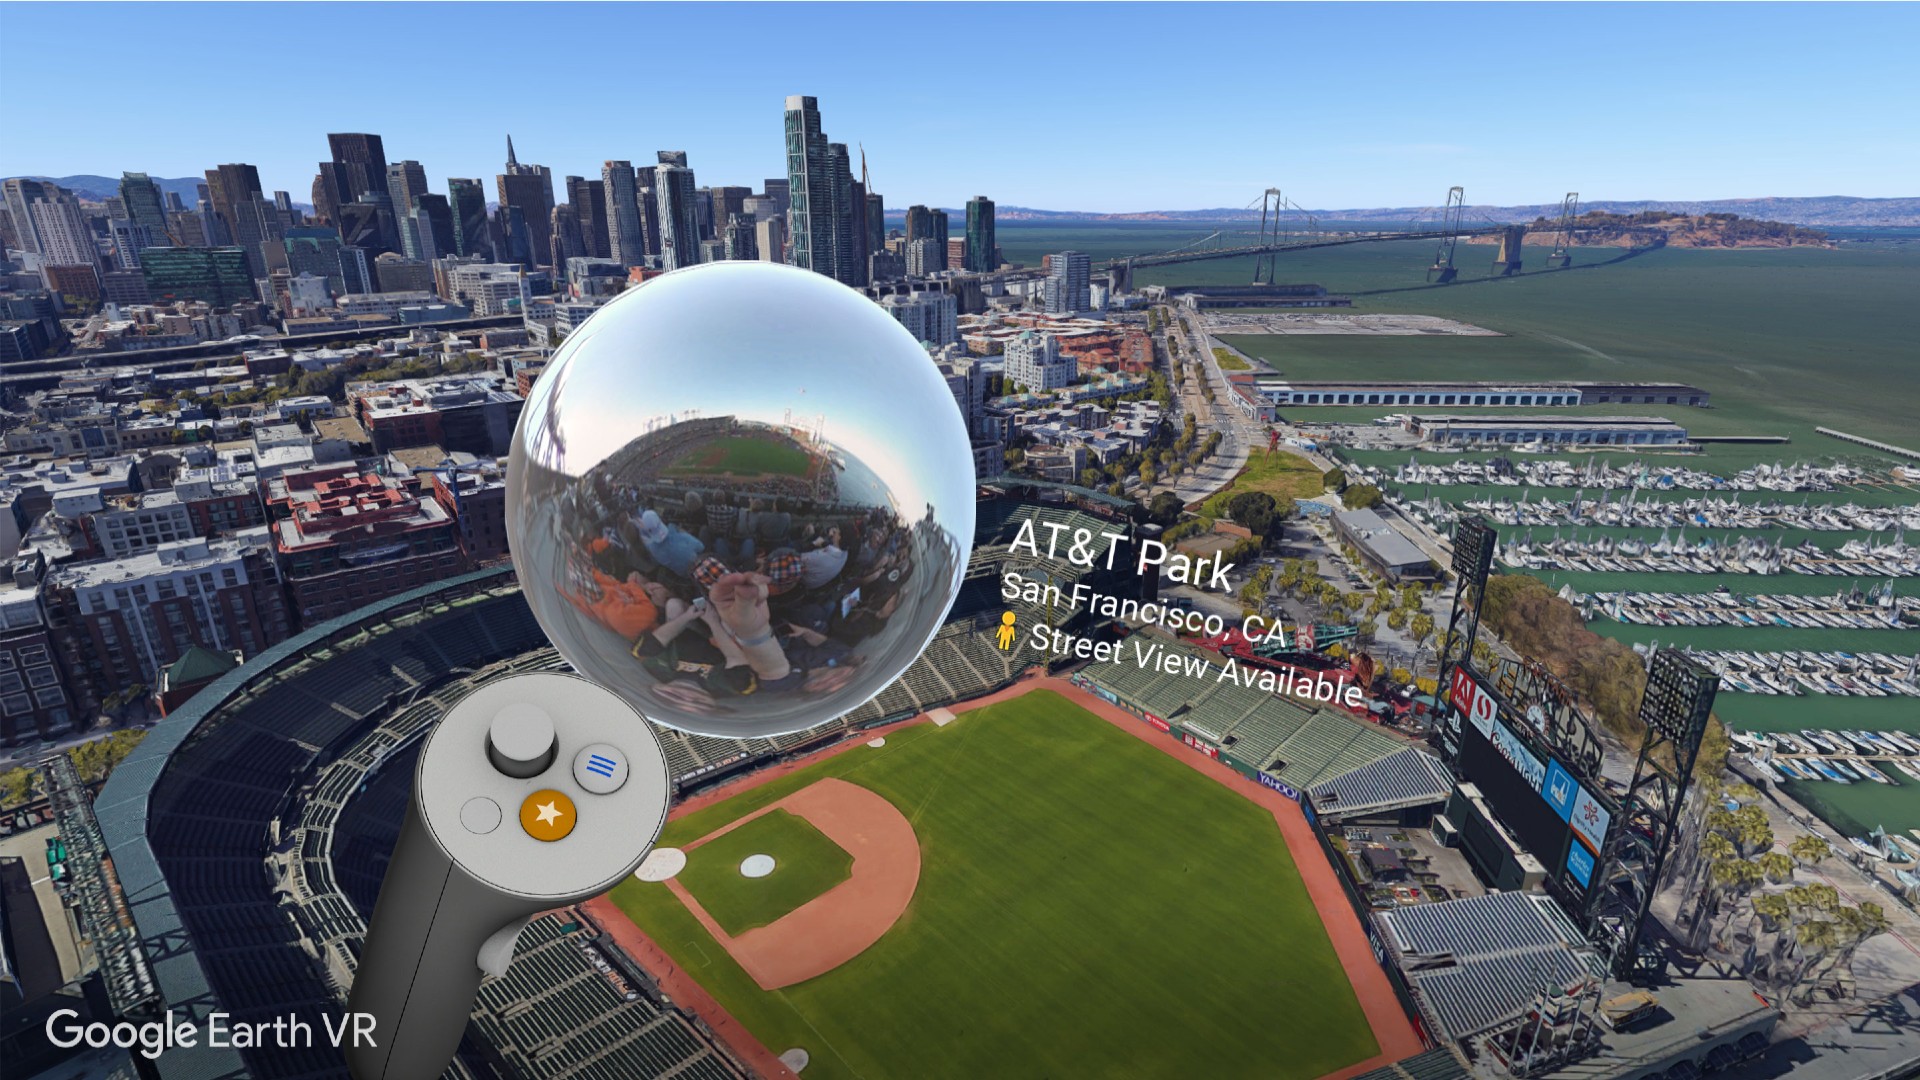 Google Earth VR game